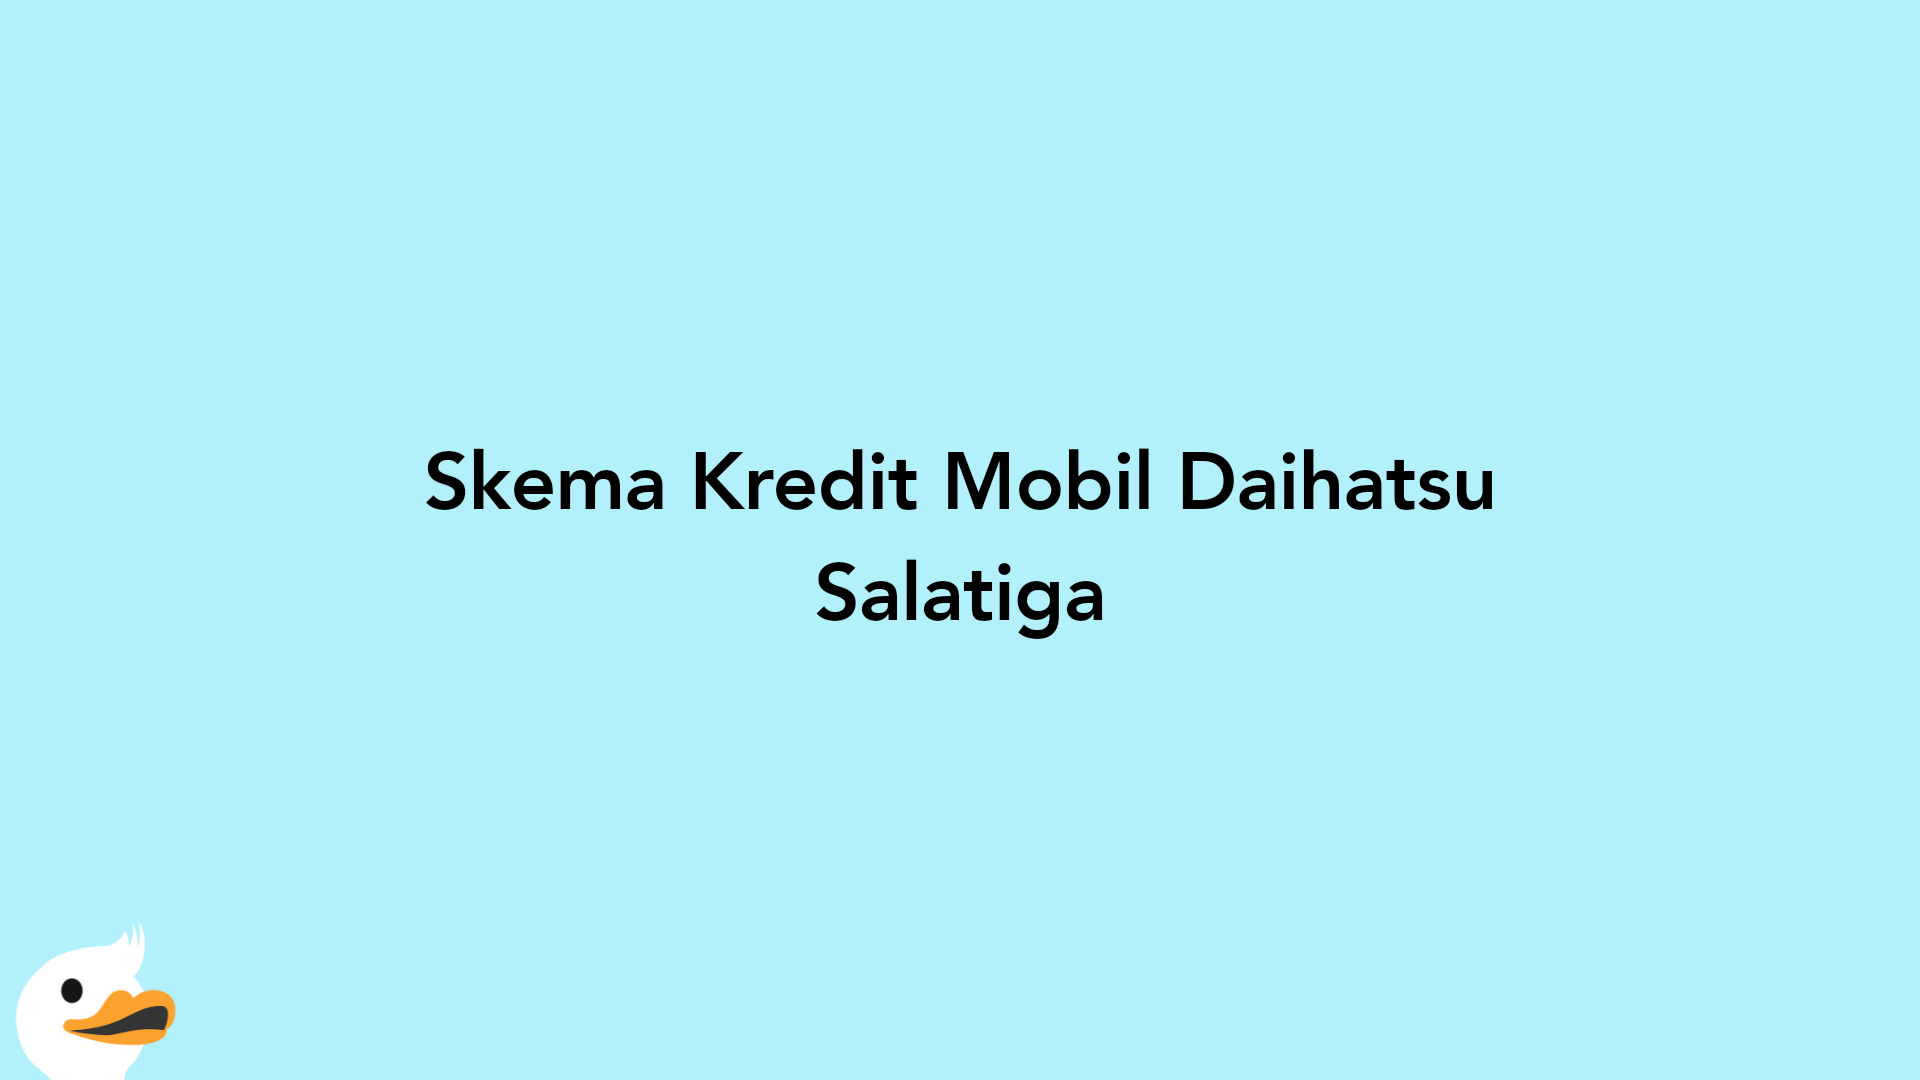 Skema Kredit Mobil Daihatsu Salatiga